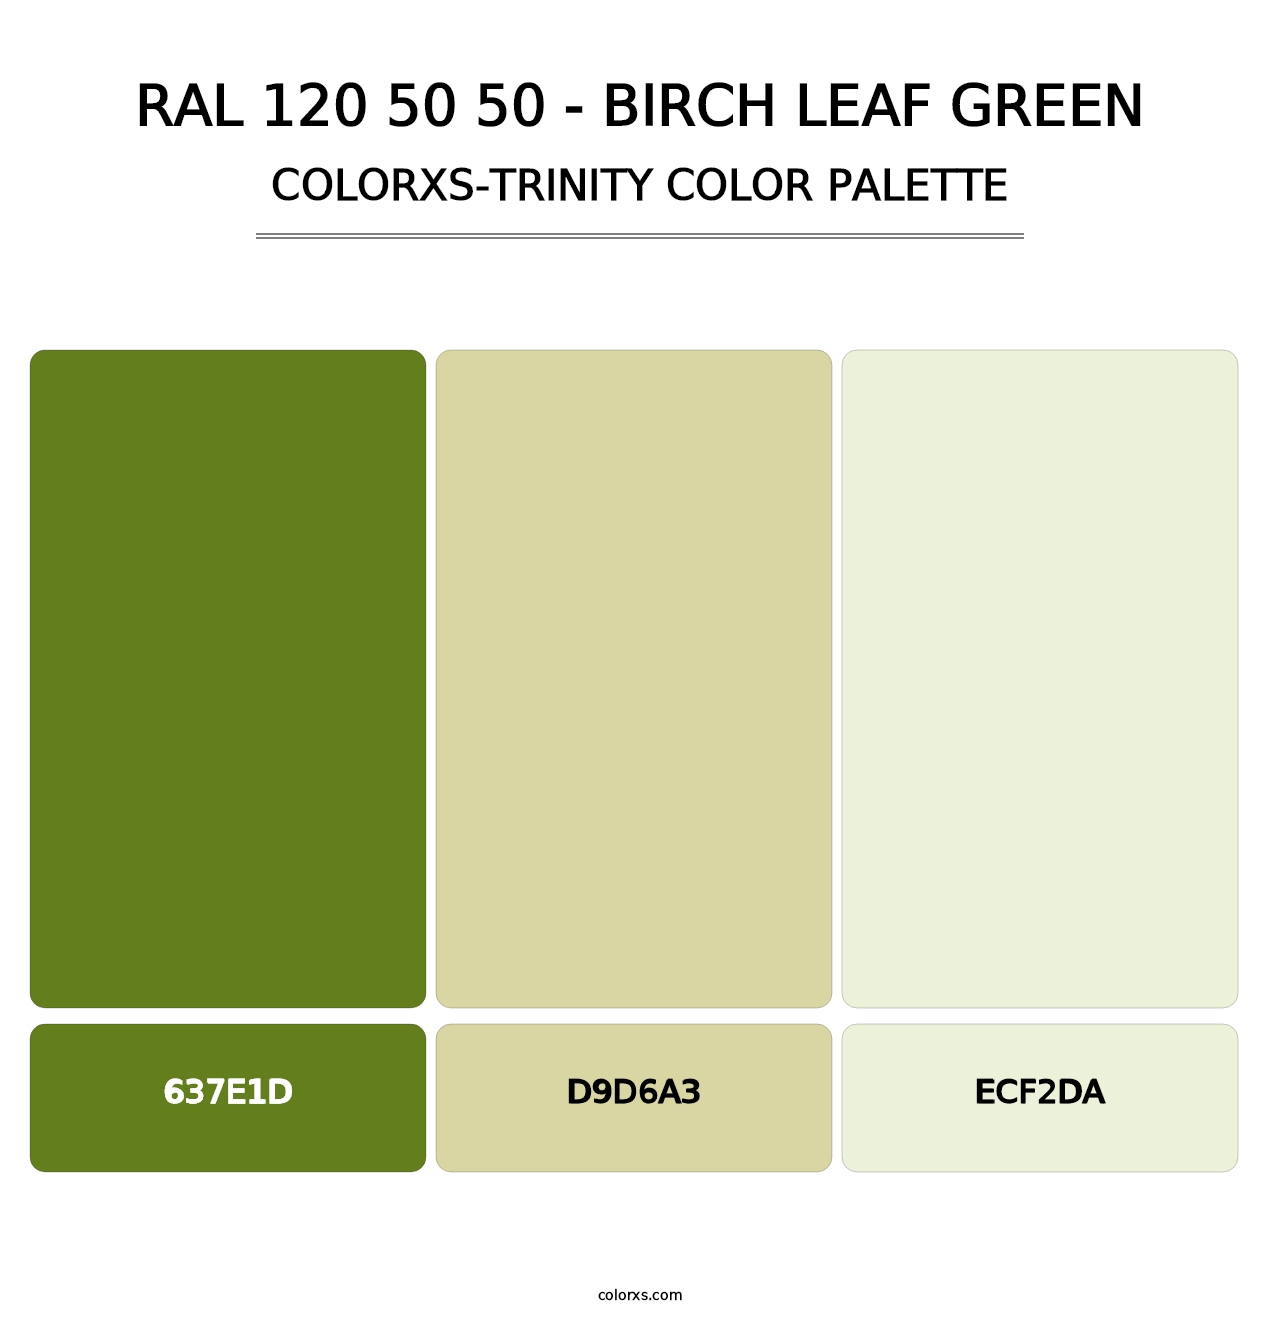 RAL 120 50 50 - Birch Leaf Green - Colorxs Trinity Palette